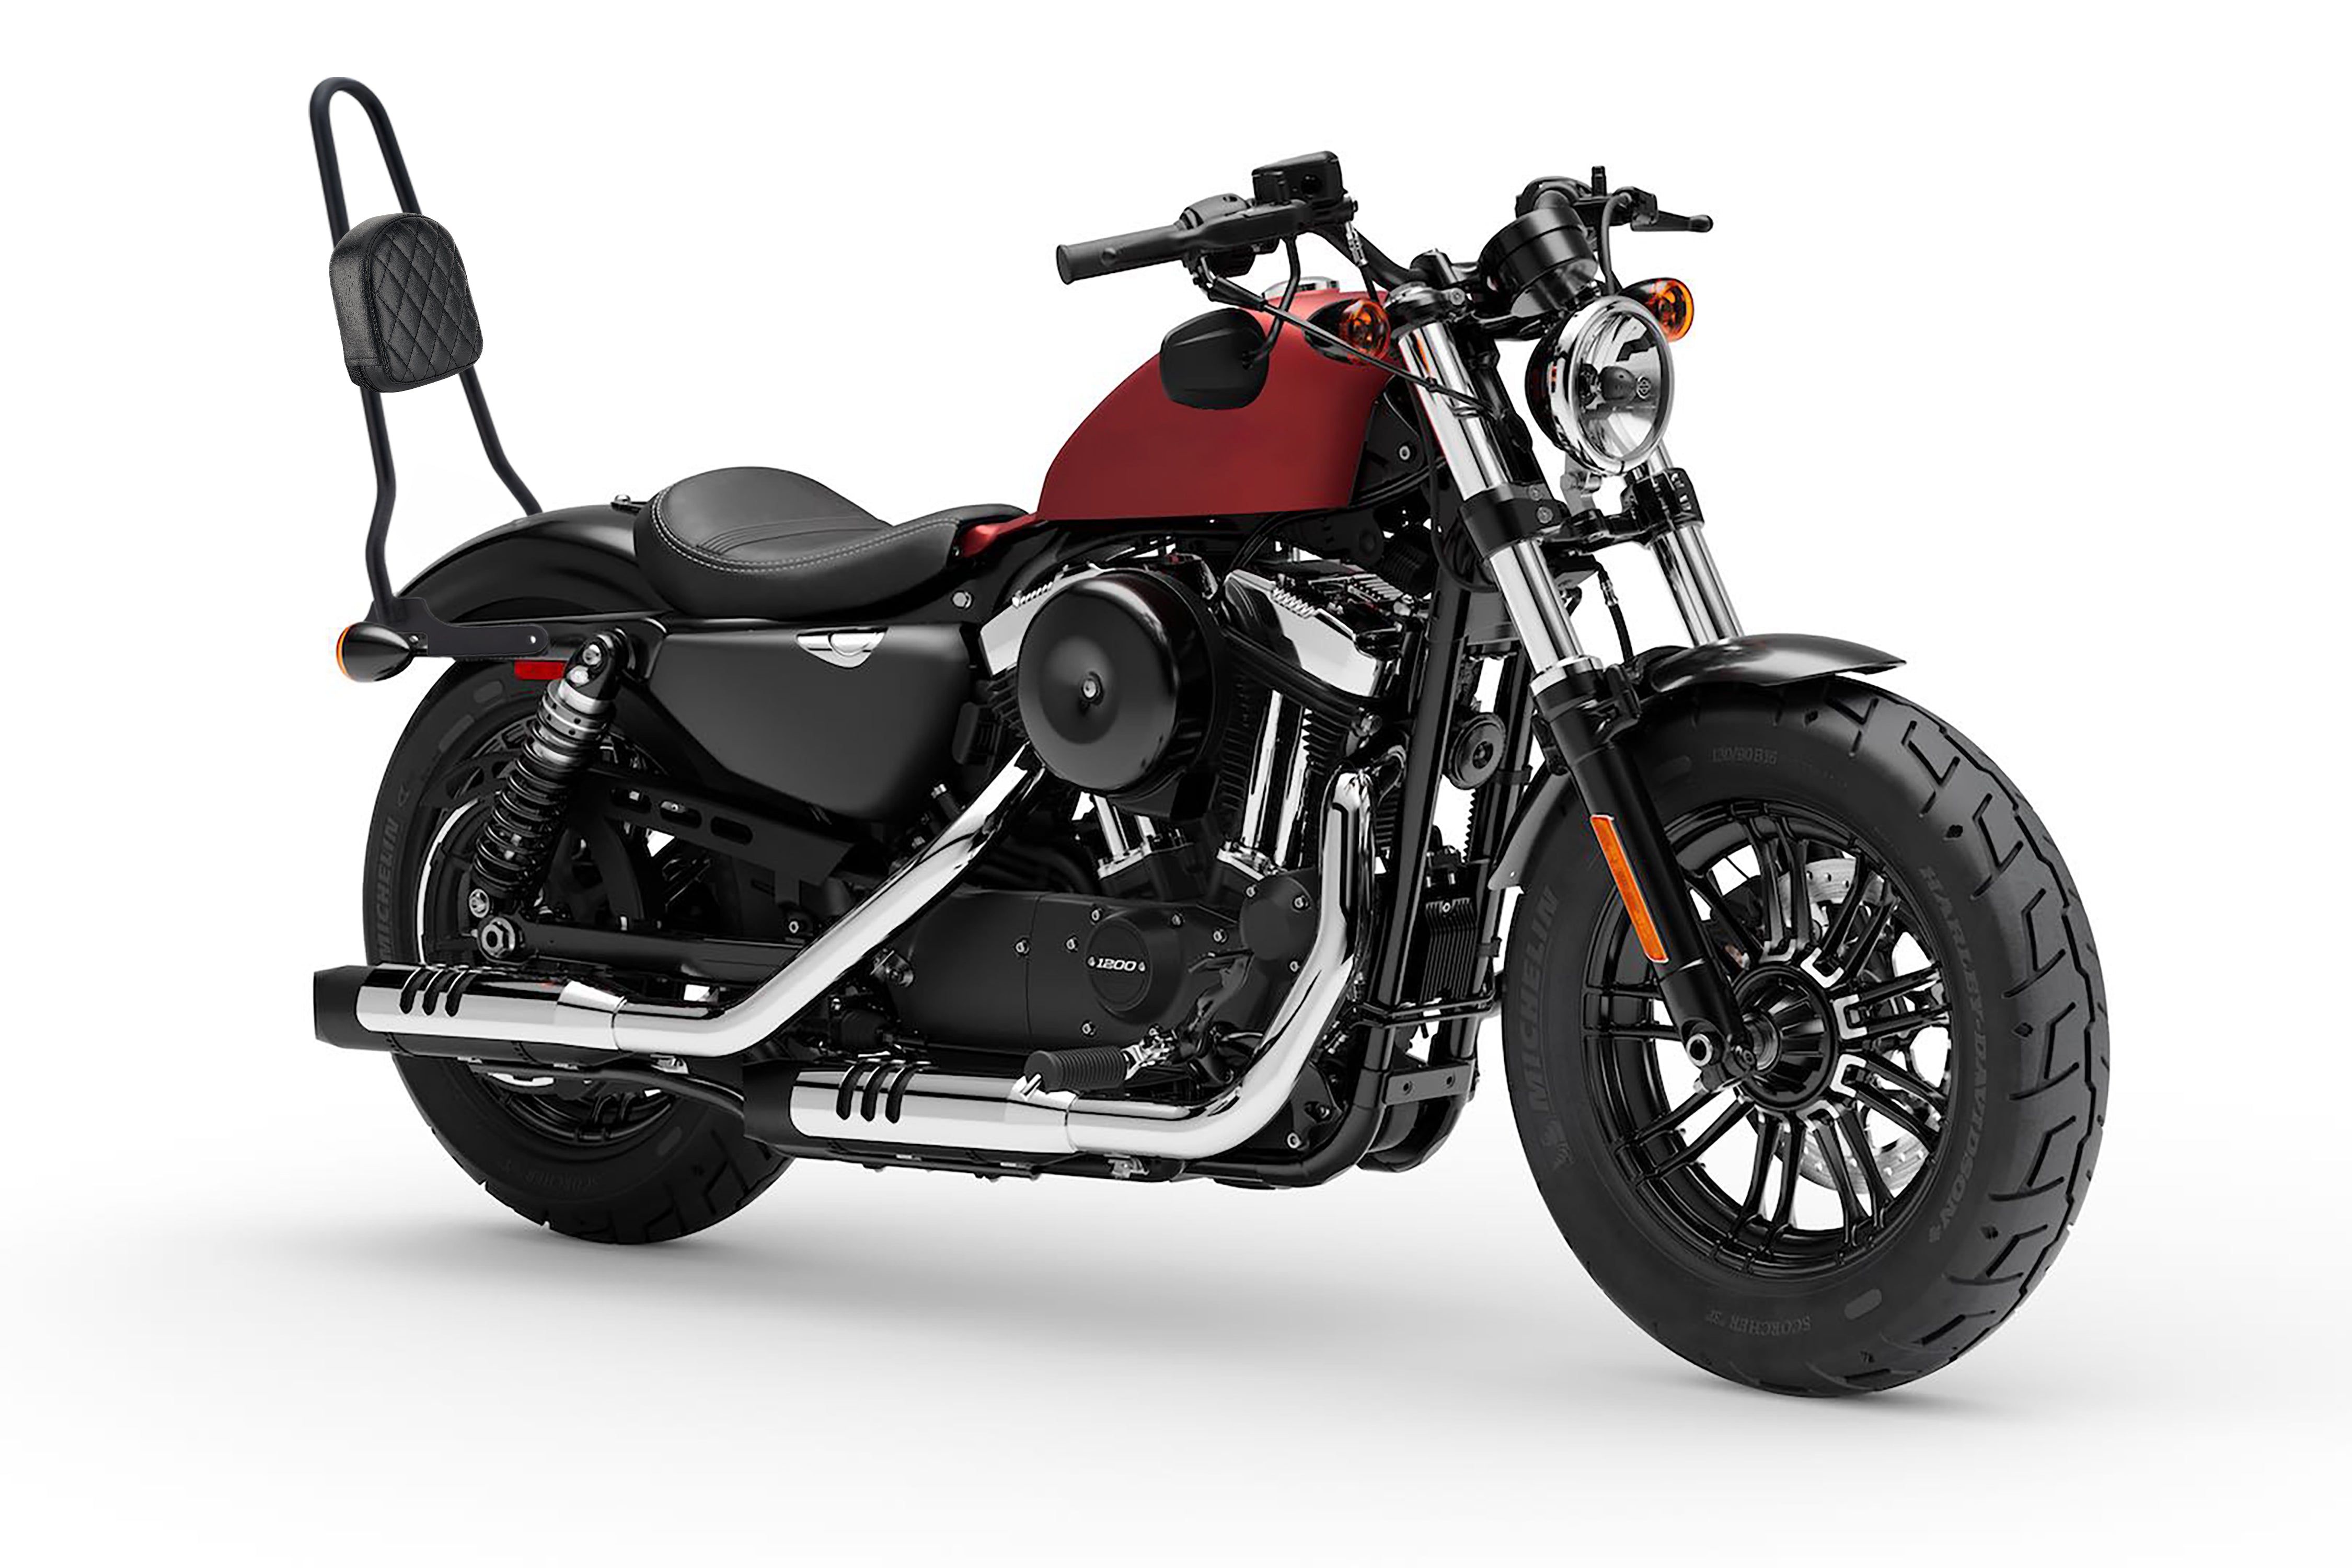 Viking Iron Born Diamond Stitch Leather Short Motorcycle Sissy Bar Pad for Harley Davidson Bag on Bike View @expand